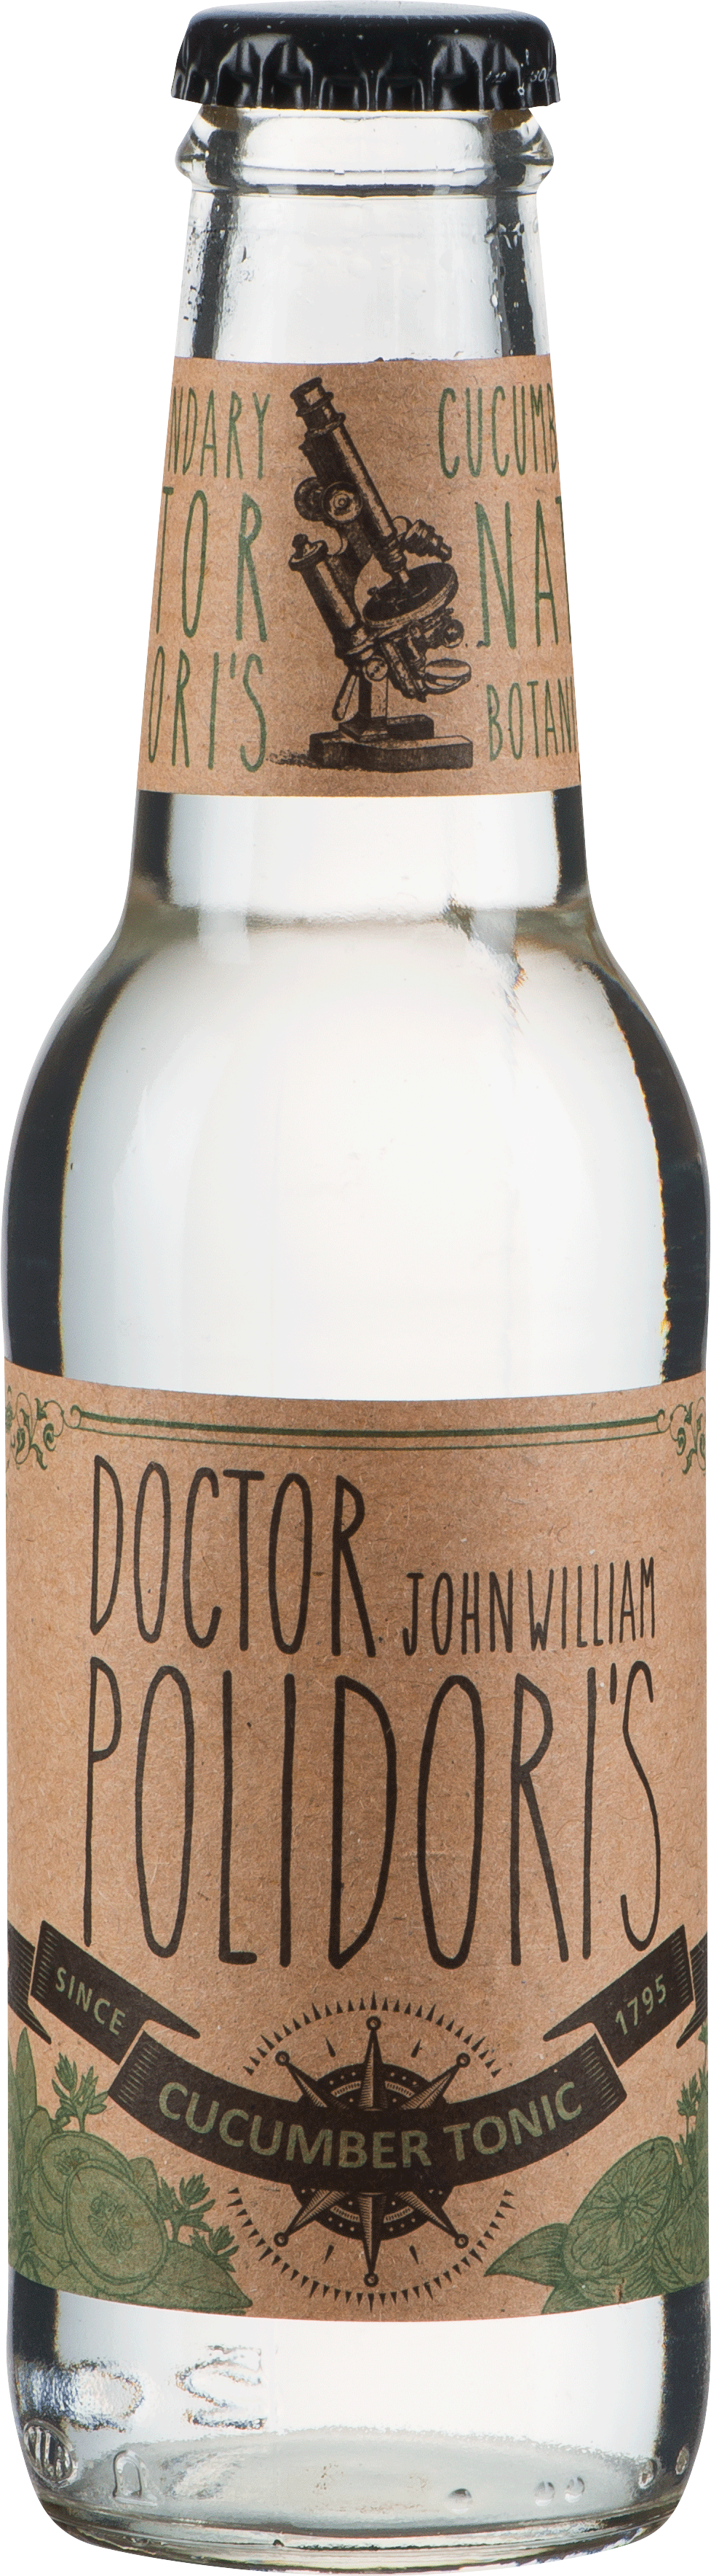 Dr. John William Polidori's Cucumber Tonic